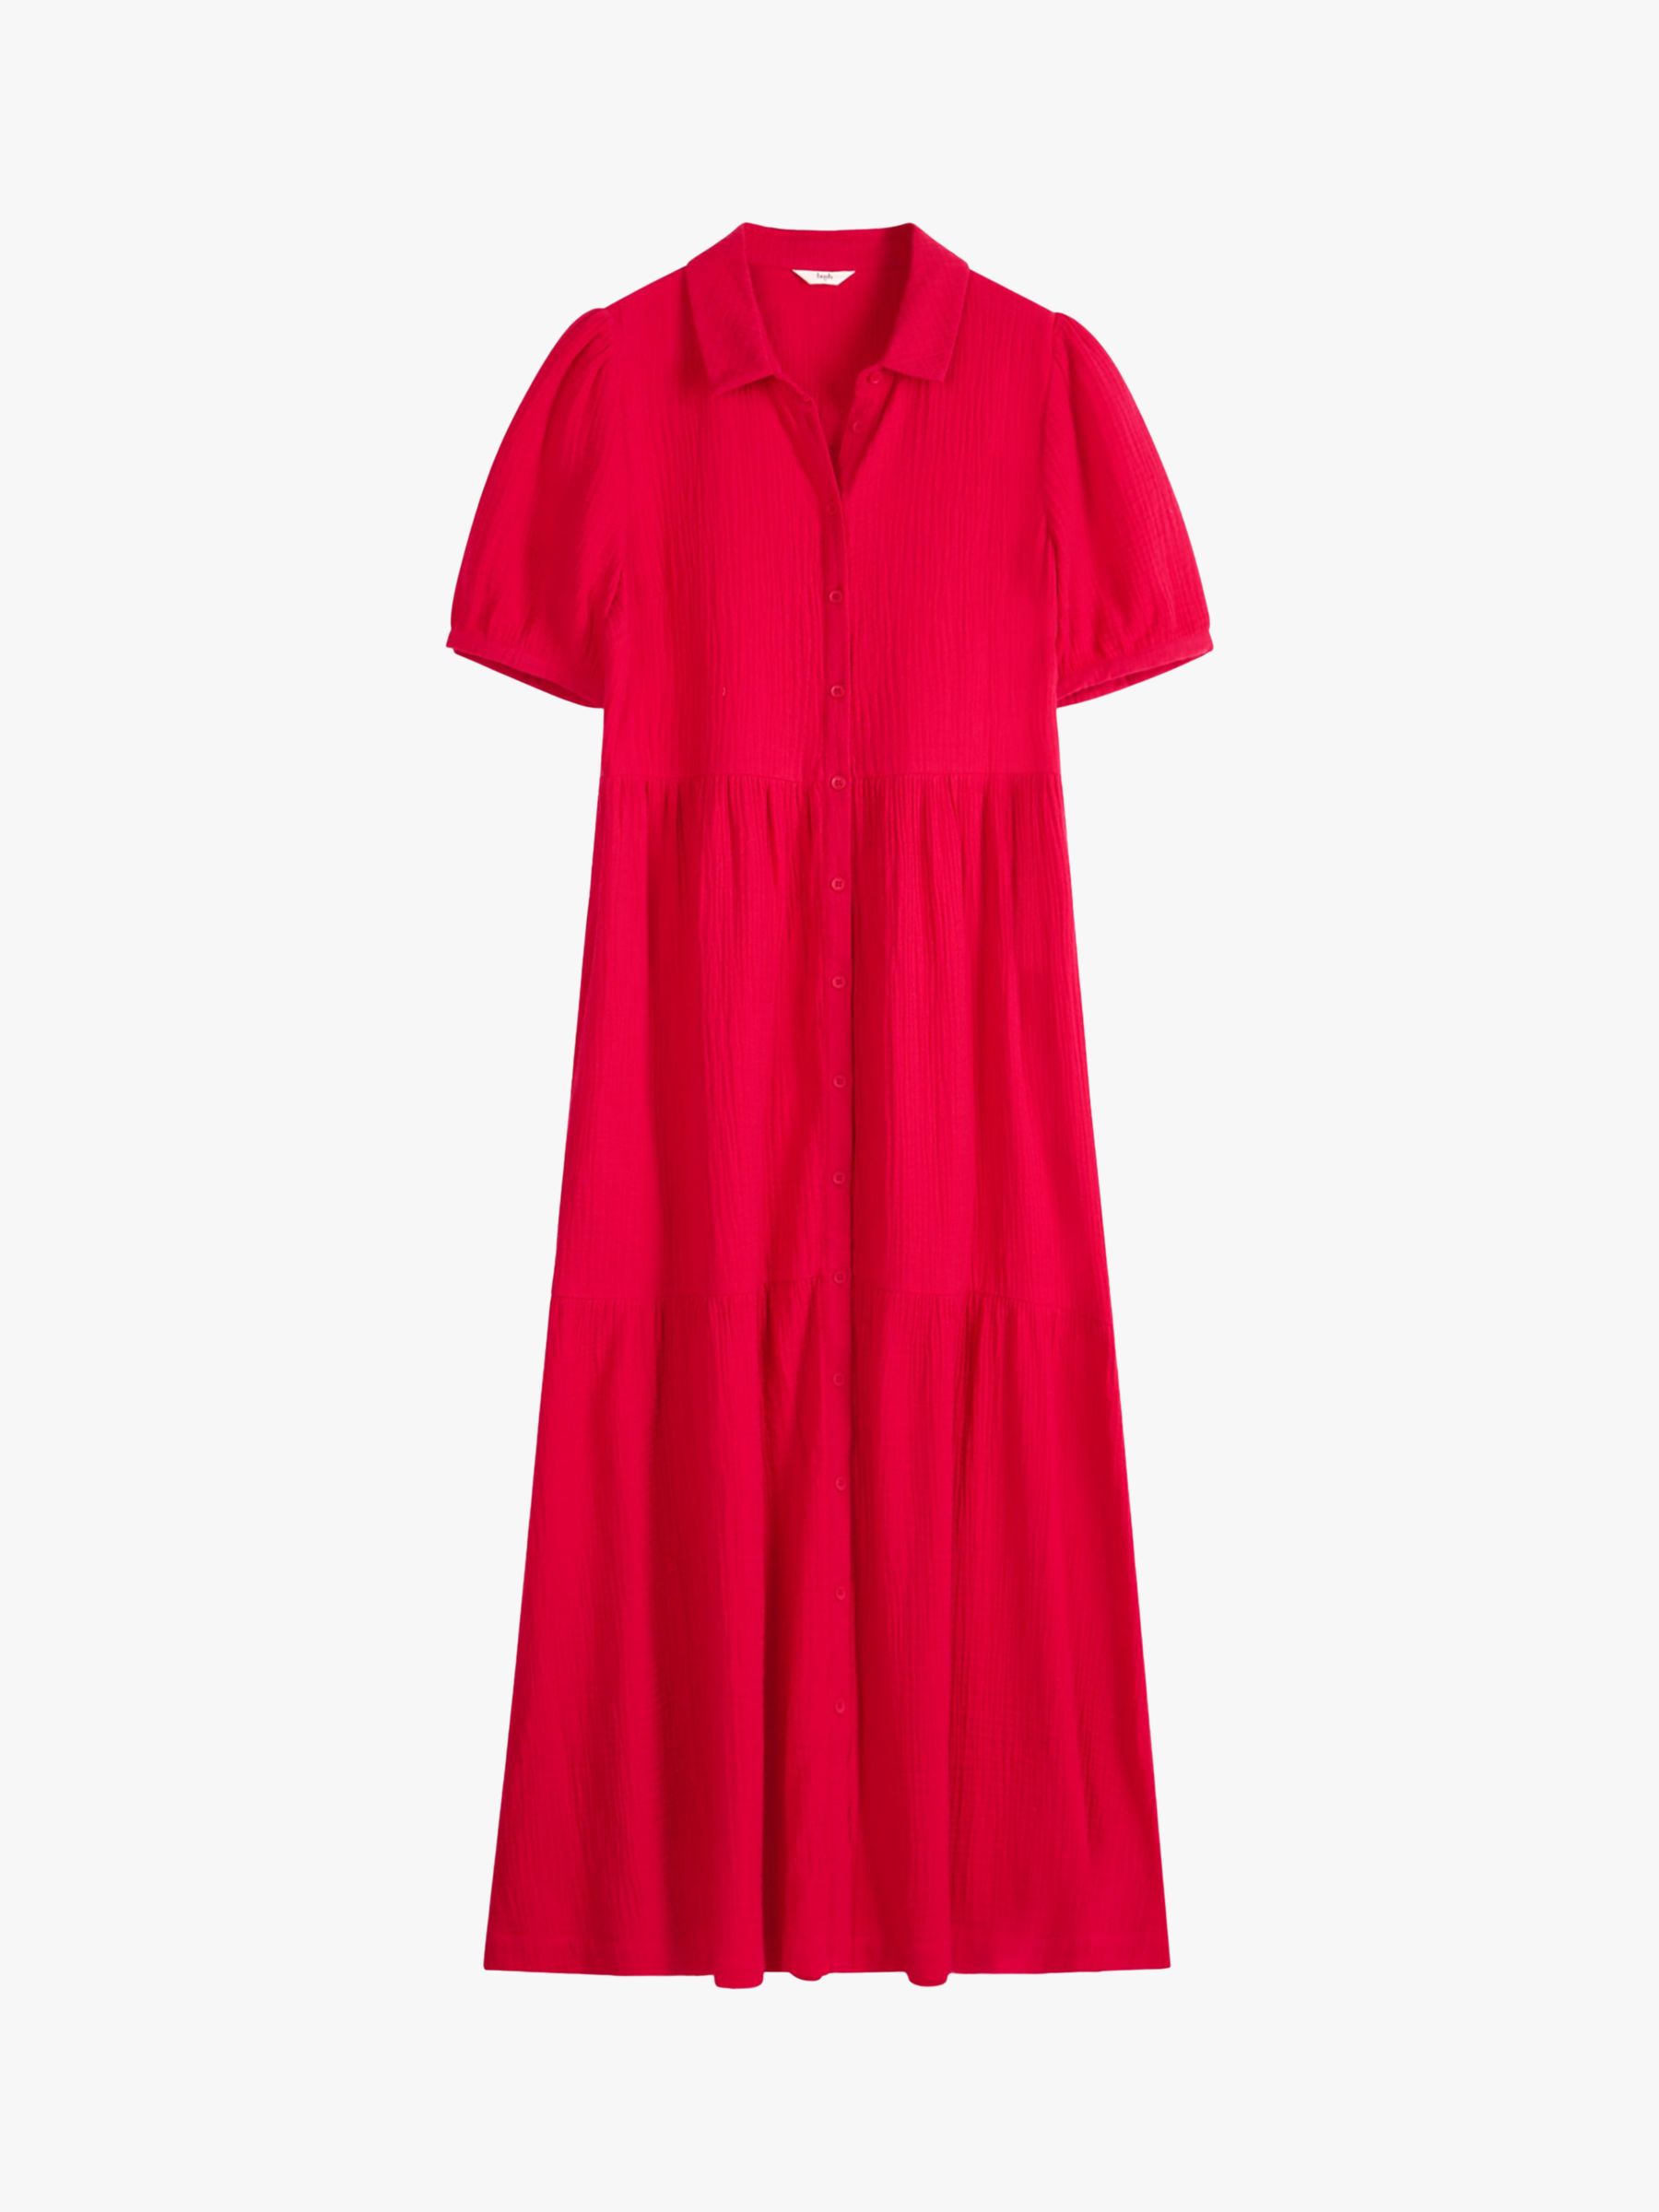 hush Clancy Textured Midi Shirt Dress, Red at John Lewis & Partners